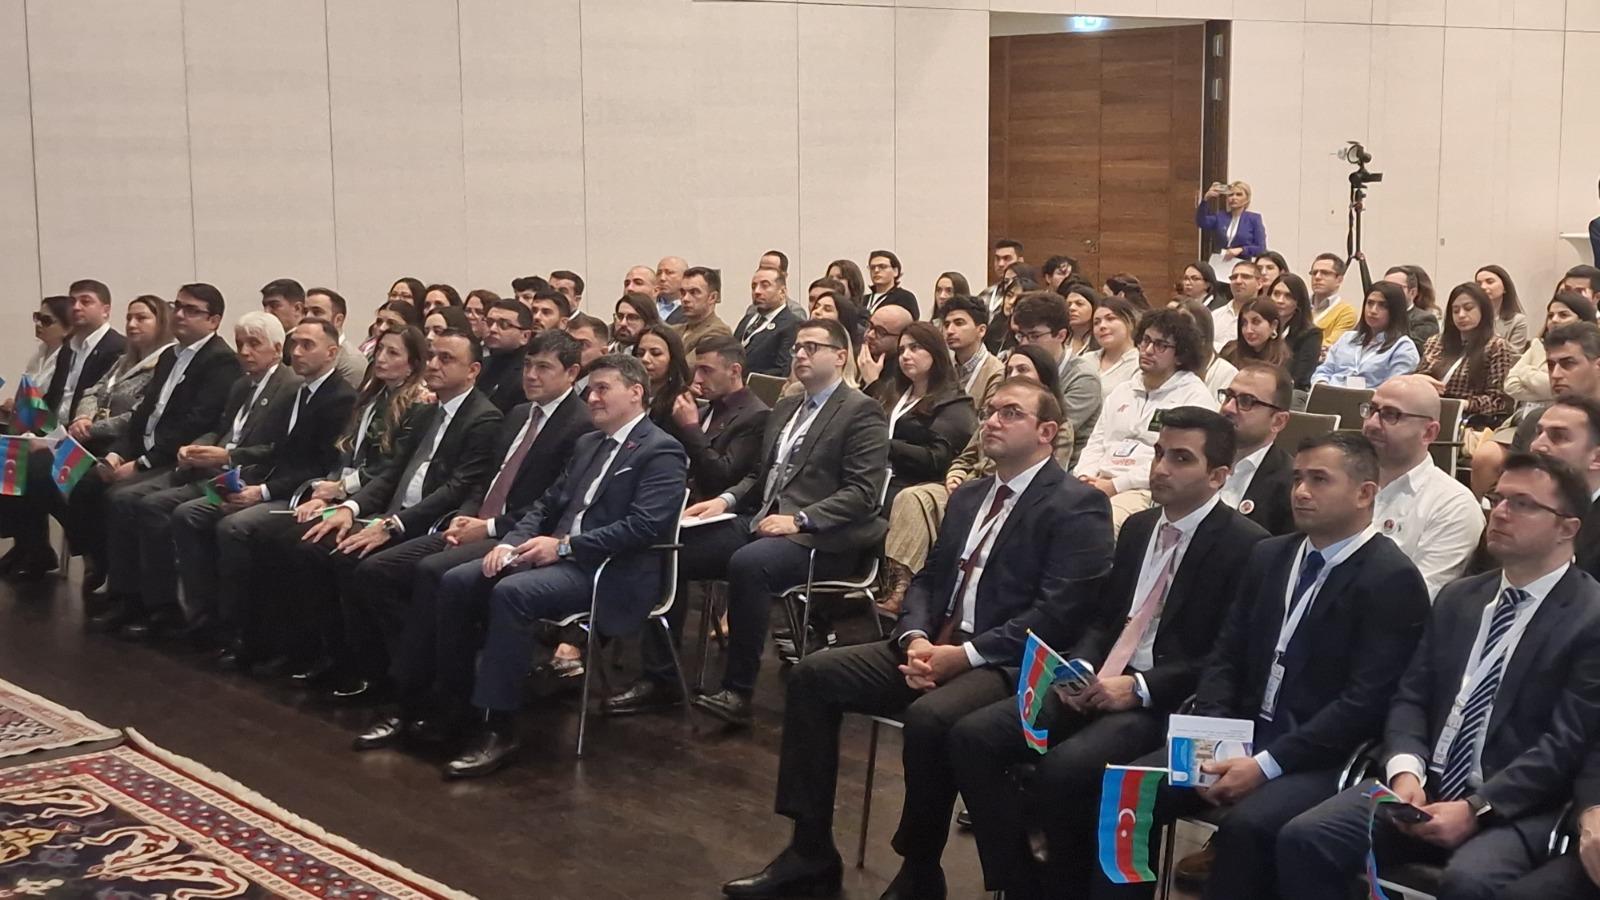 Форум азербайджана. Молодые врачи Азербайджана конференция.